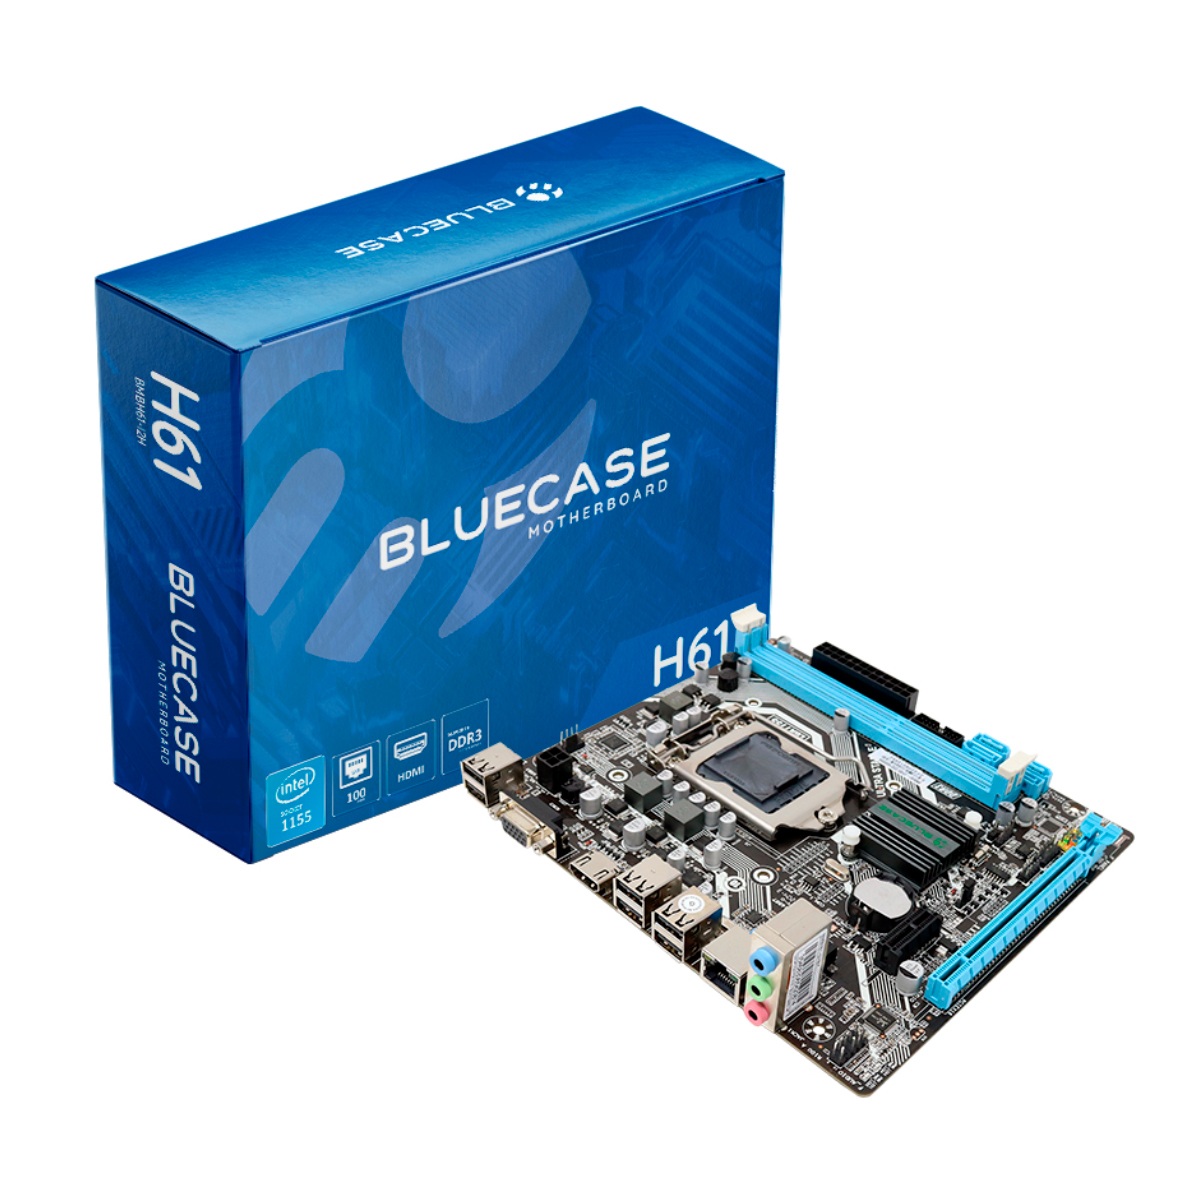 Placa Mãe Bluecase BMBH61-I2HBX - (LGA 1155 DDR3) - Chipset Intel H61